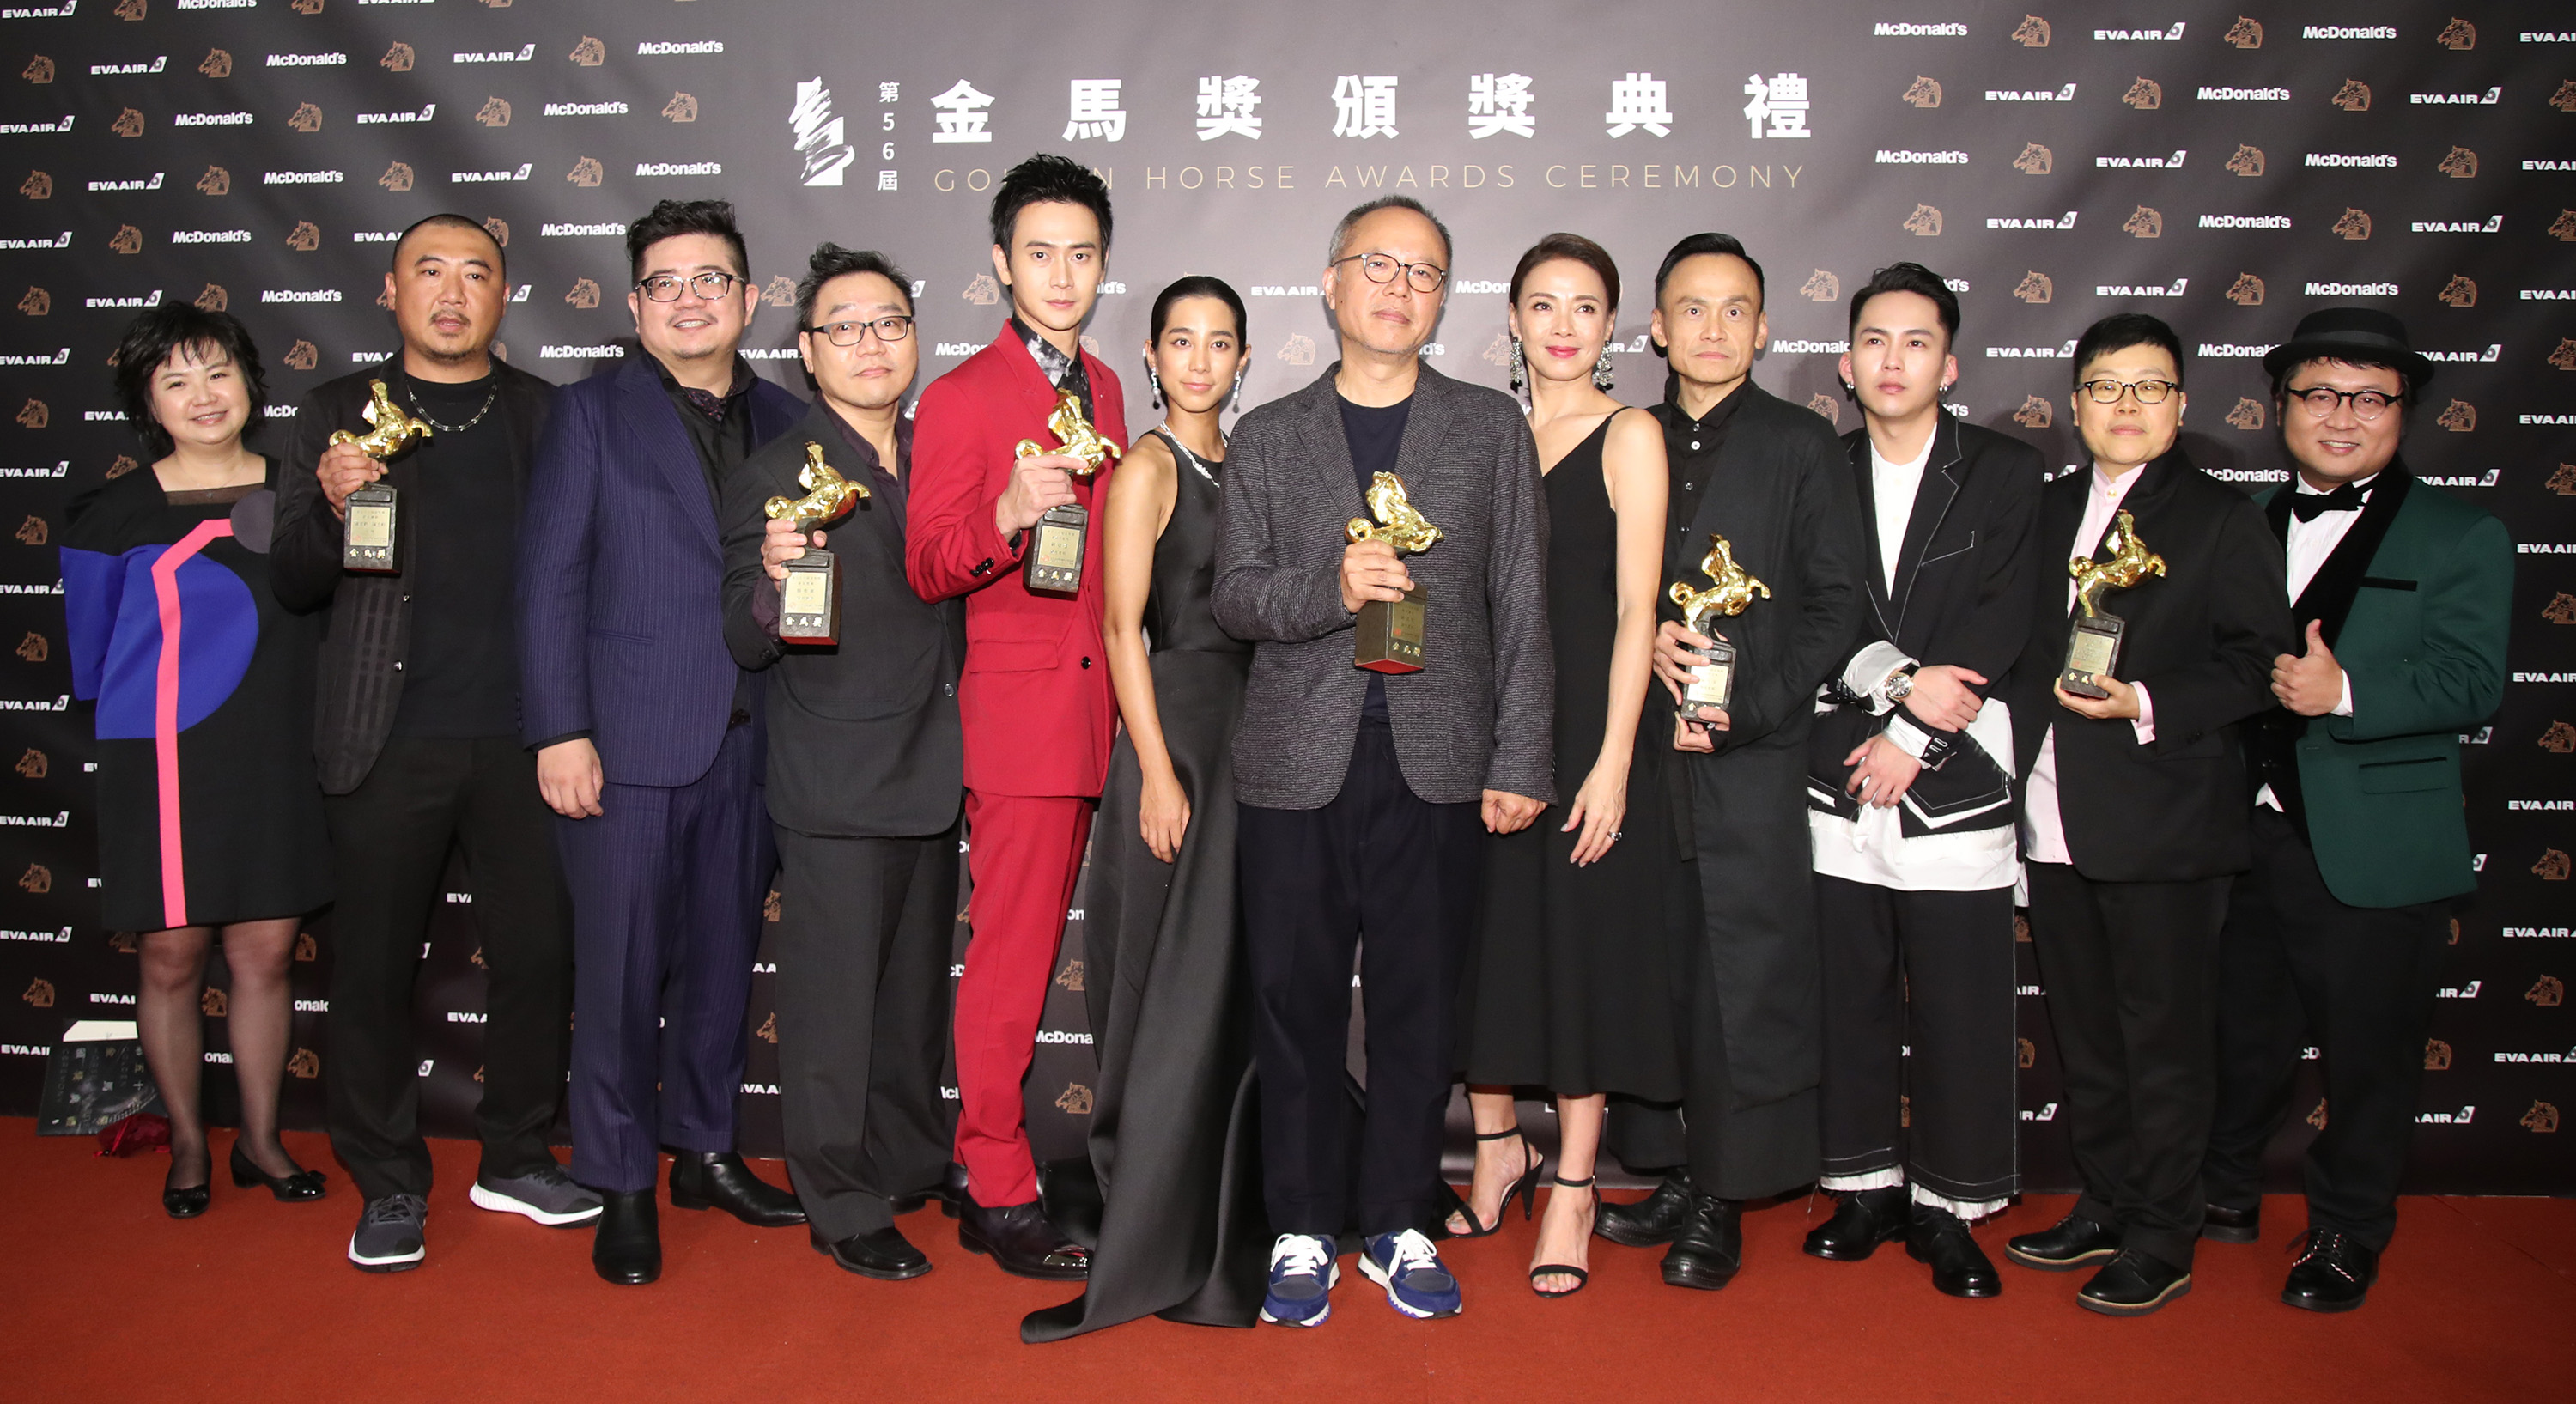 Chung Mong-hong's Film 'A Sun' receives acclaim from American film critics